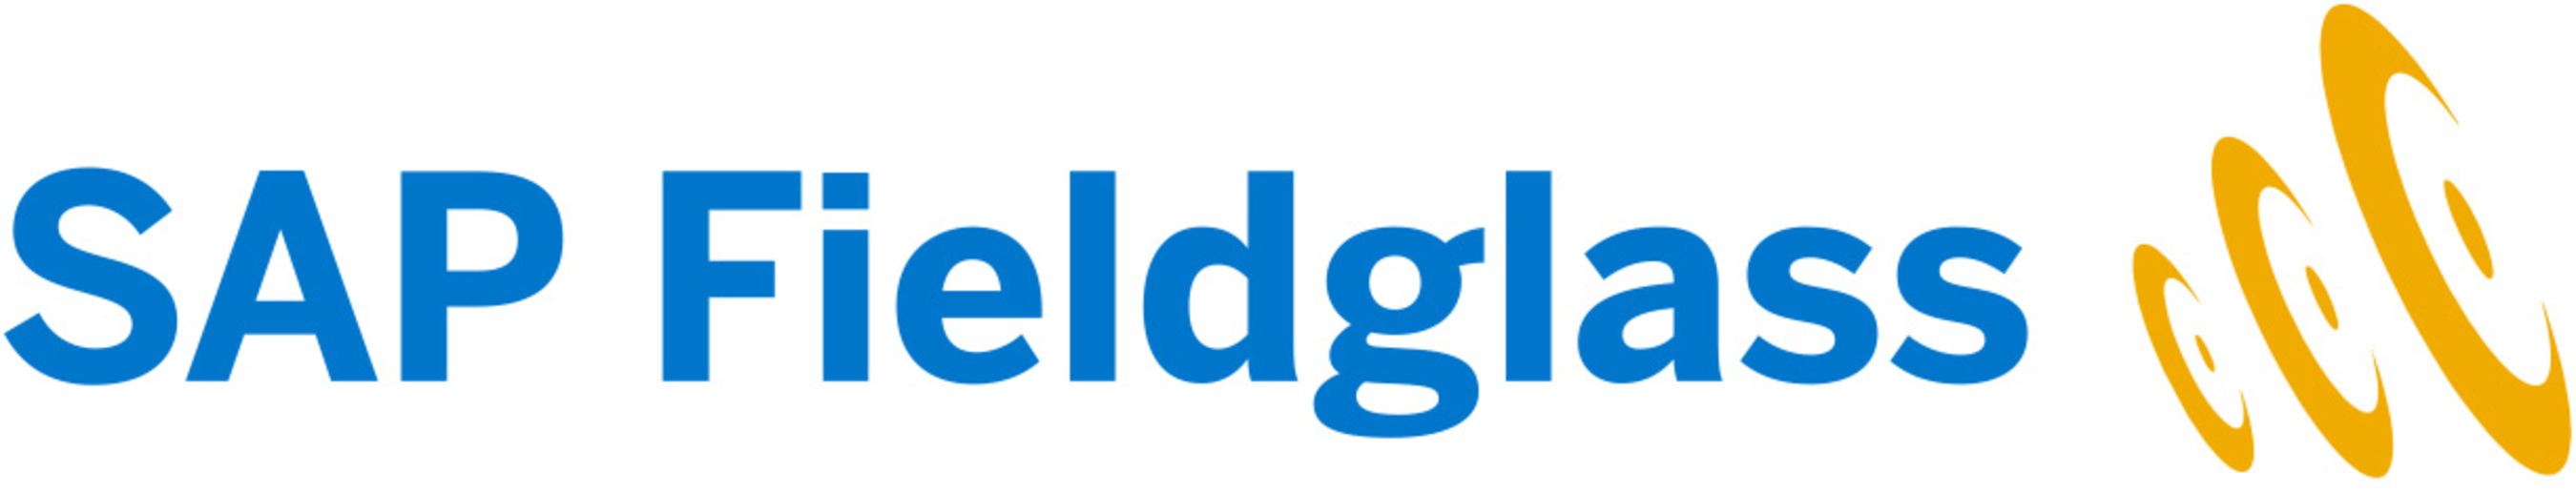 Fieldglass, Inc. Logo.